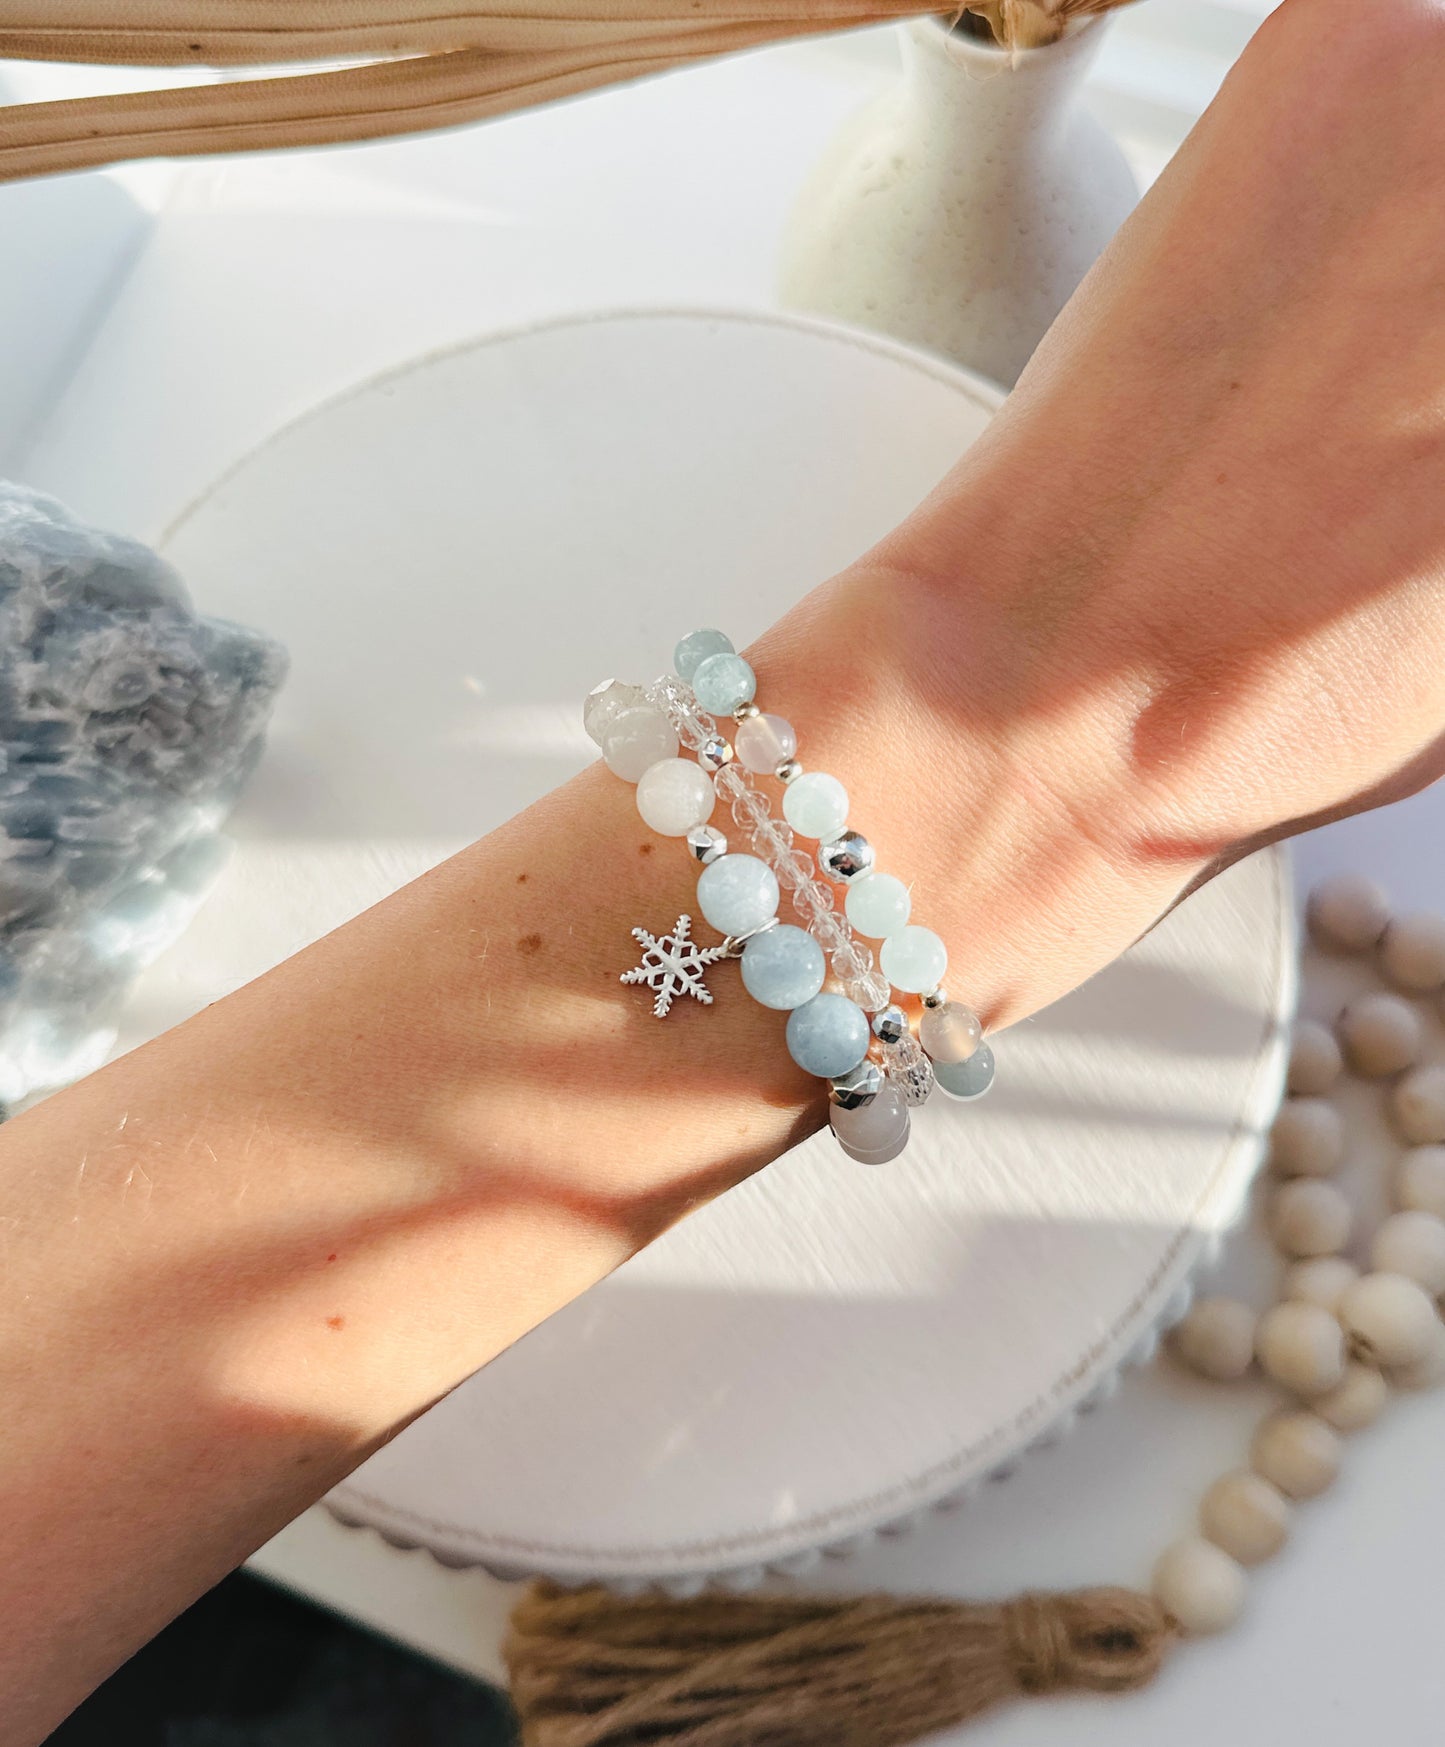 The Snowflake bracelet set